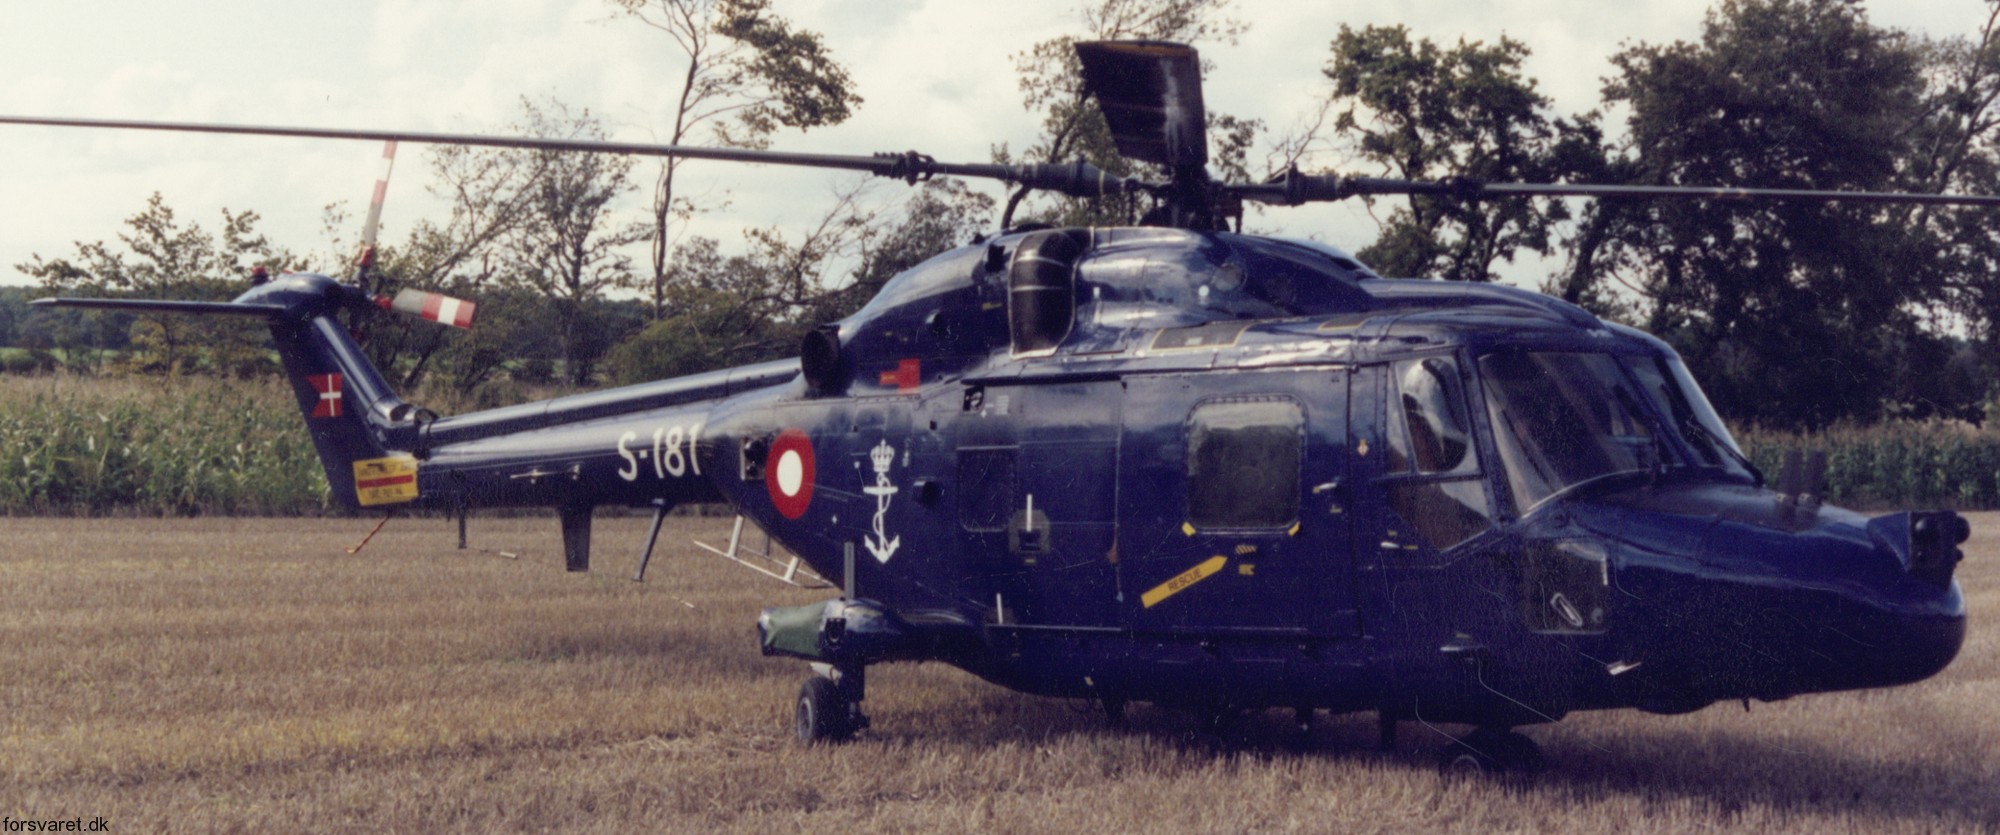 lynx mk.80 mk.90b helicopter westland royal danish navy air force kongelige danske marine flyvevabnet s-181 07